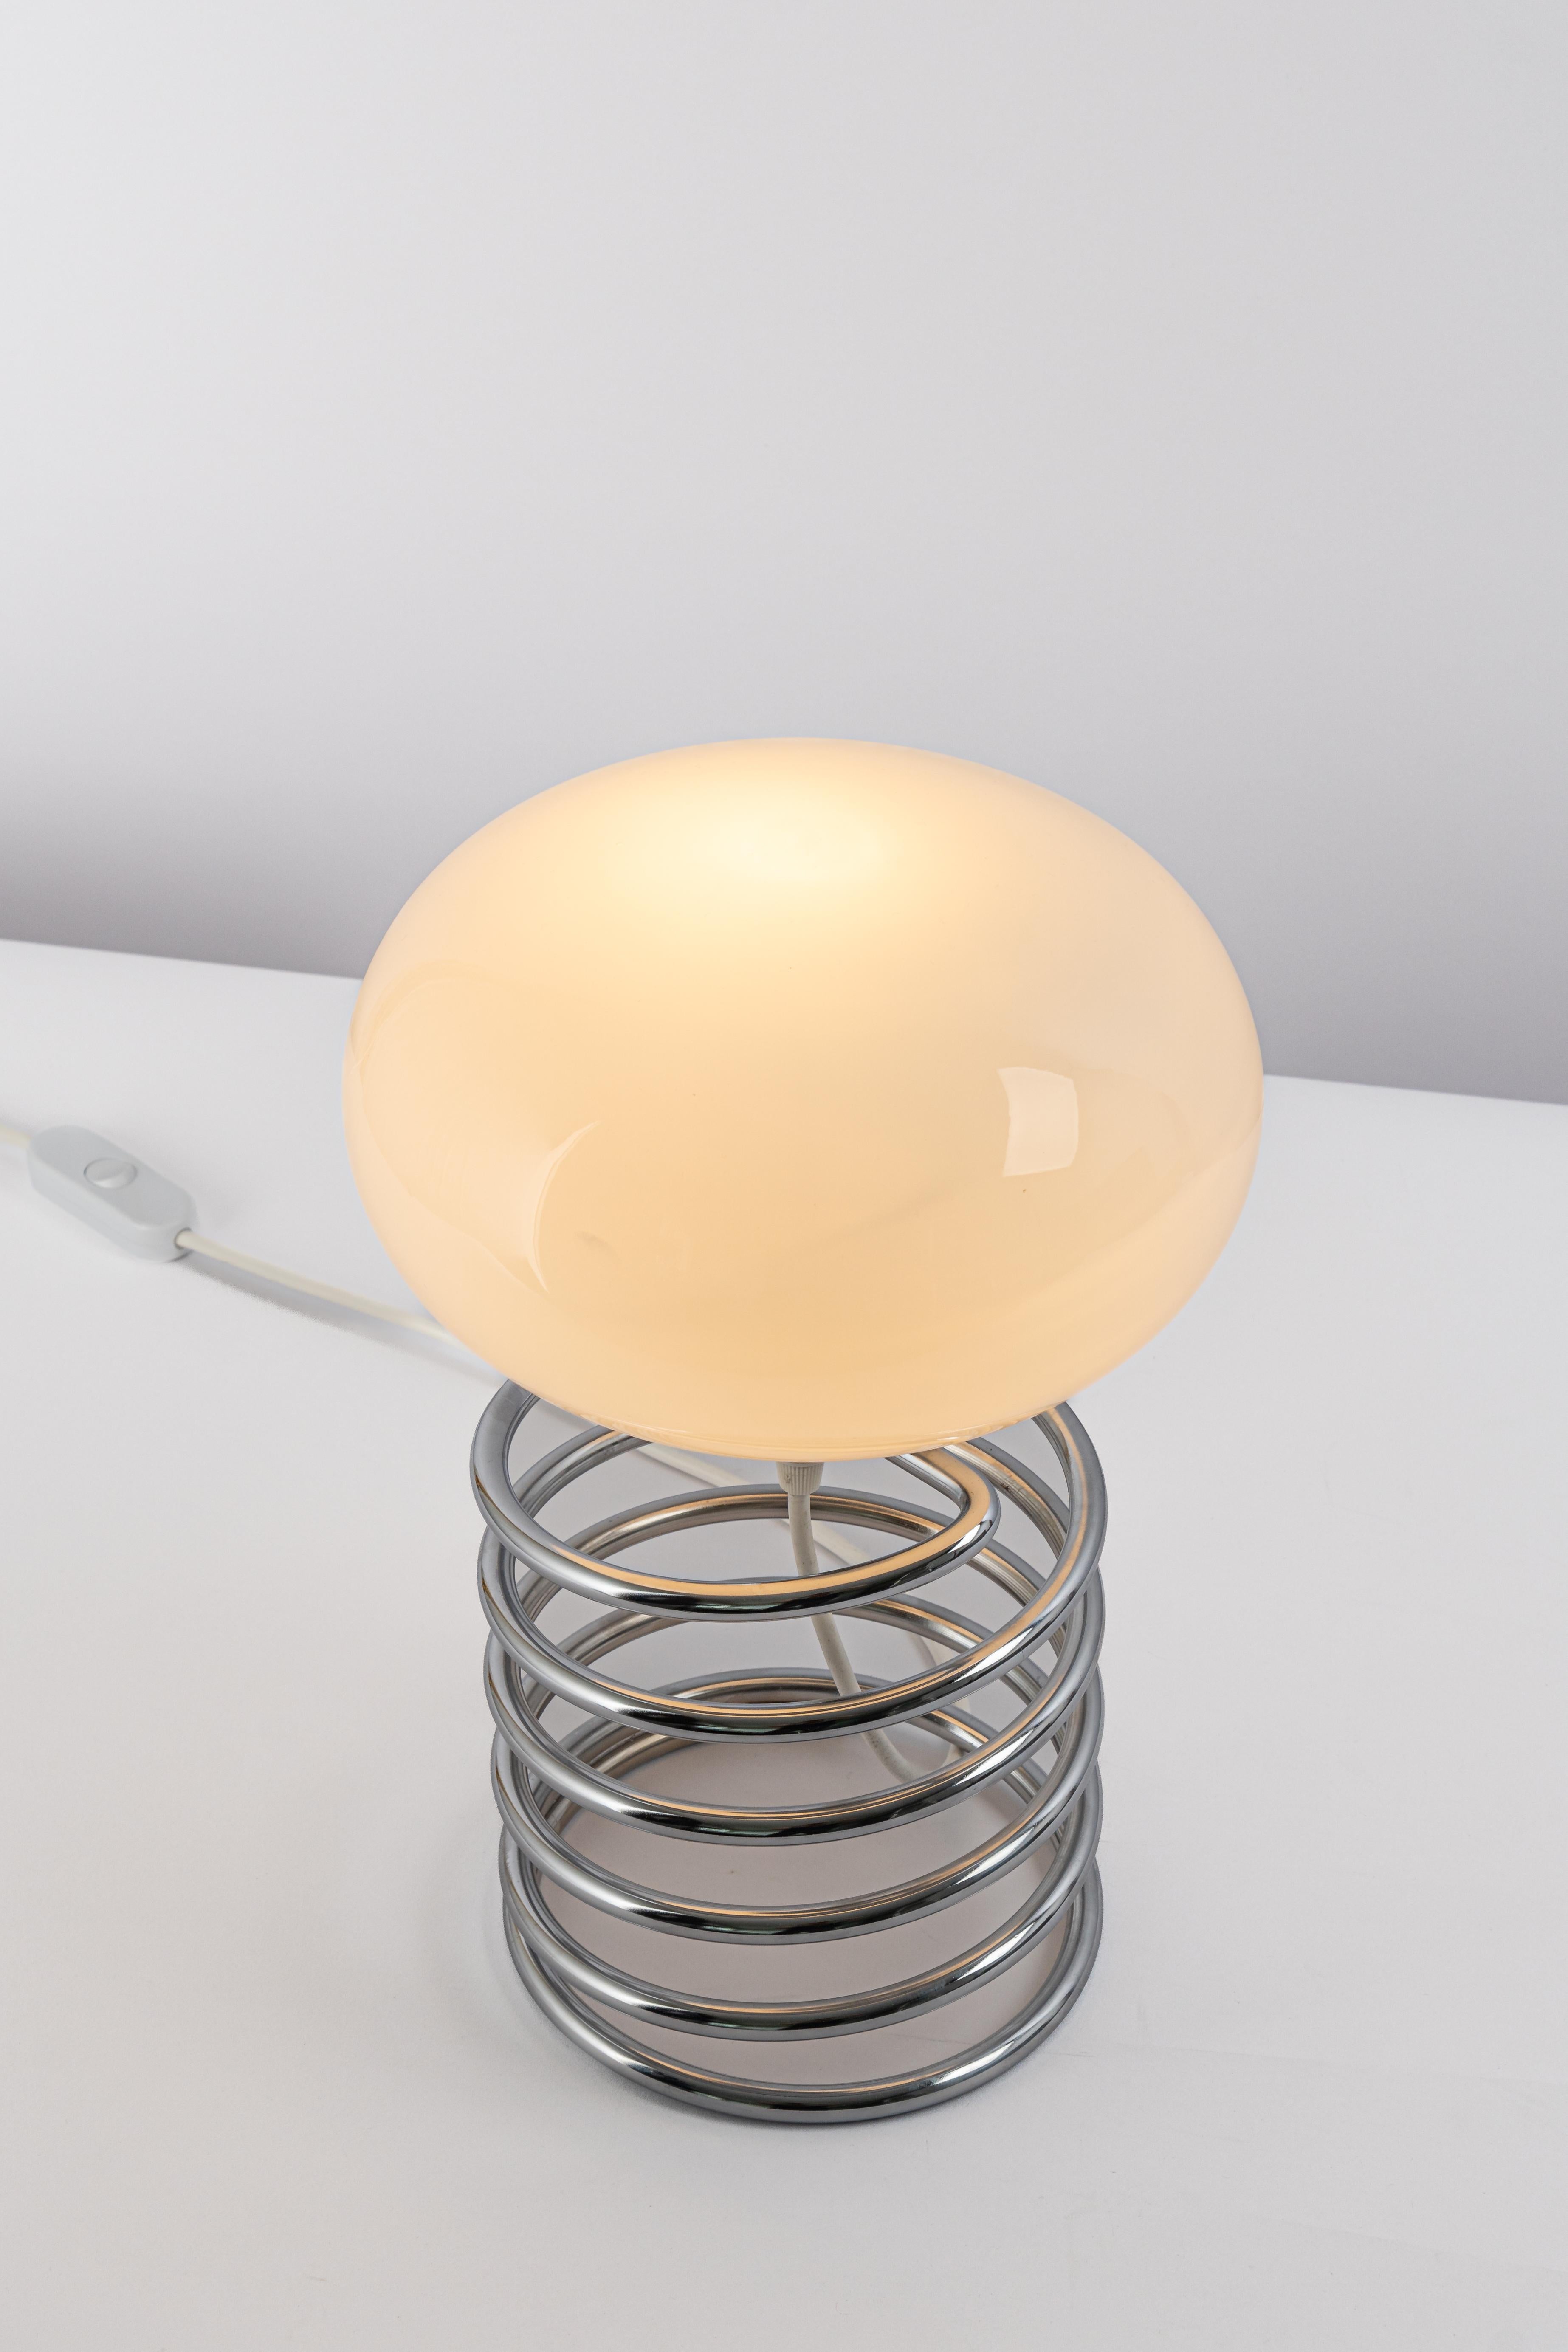 Late 20th Century Stunning Petite Design Spiral Table Lamp, Ingo Maurer, 1970s